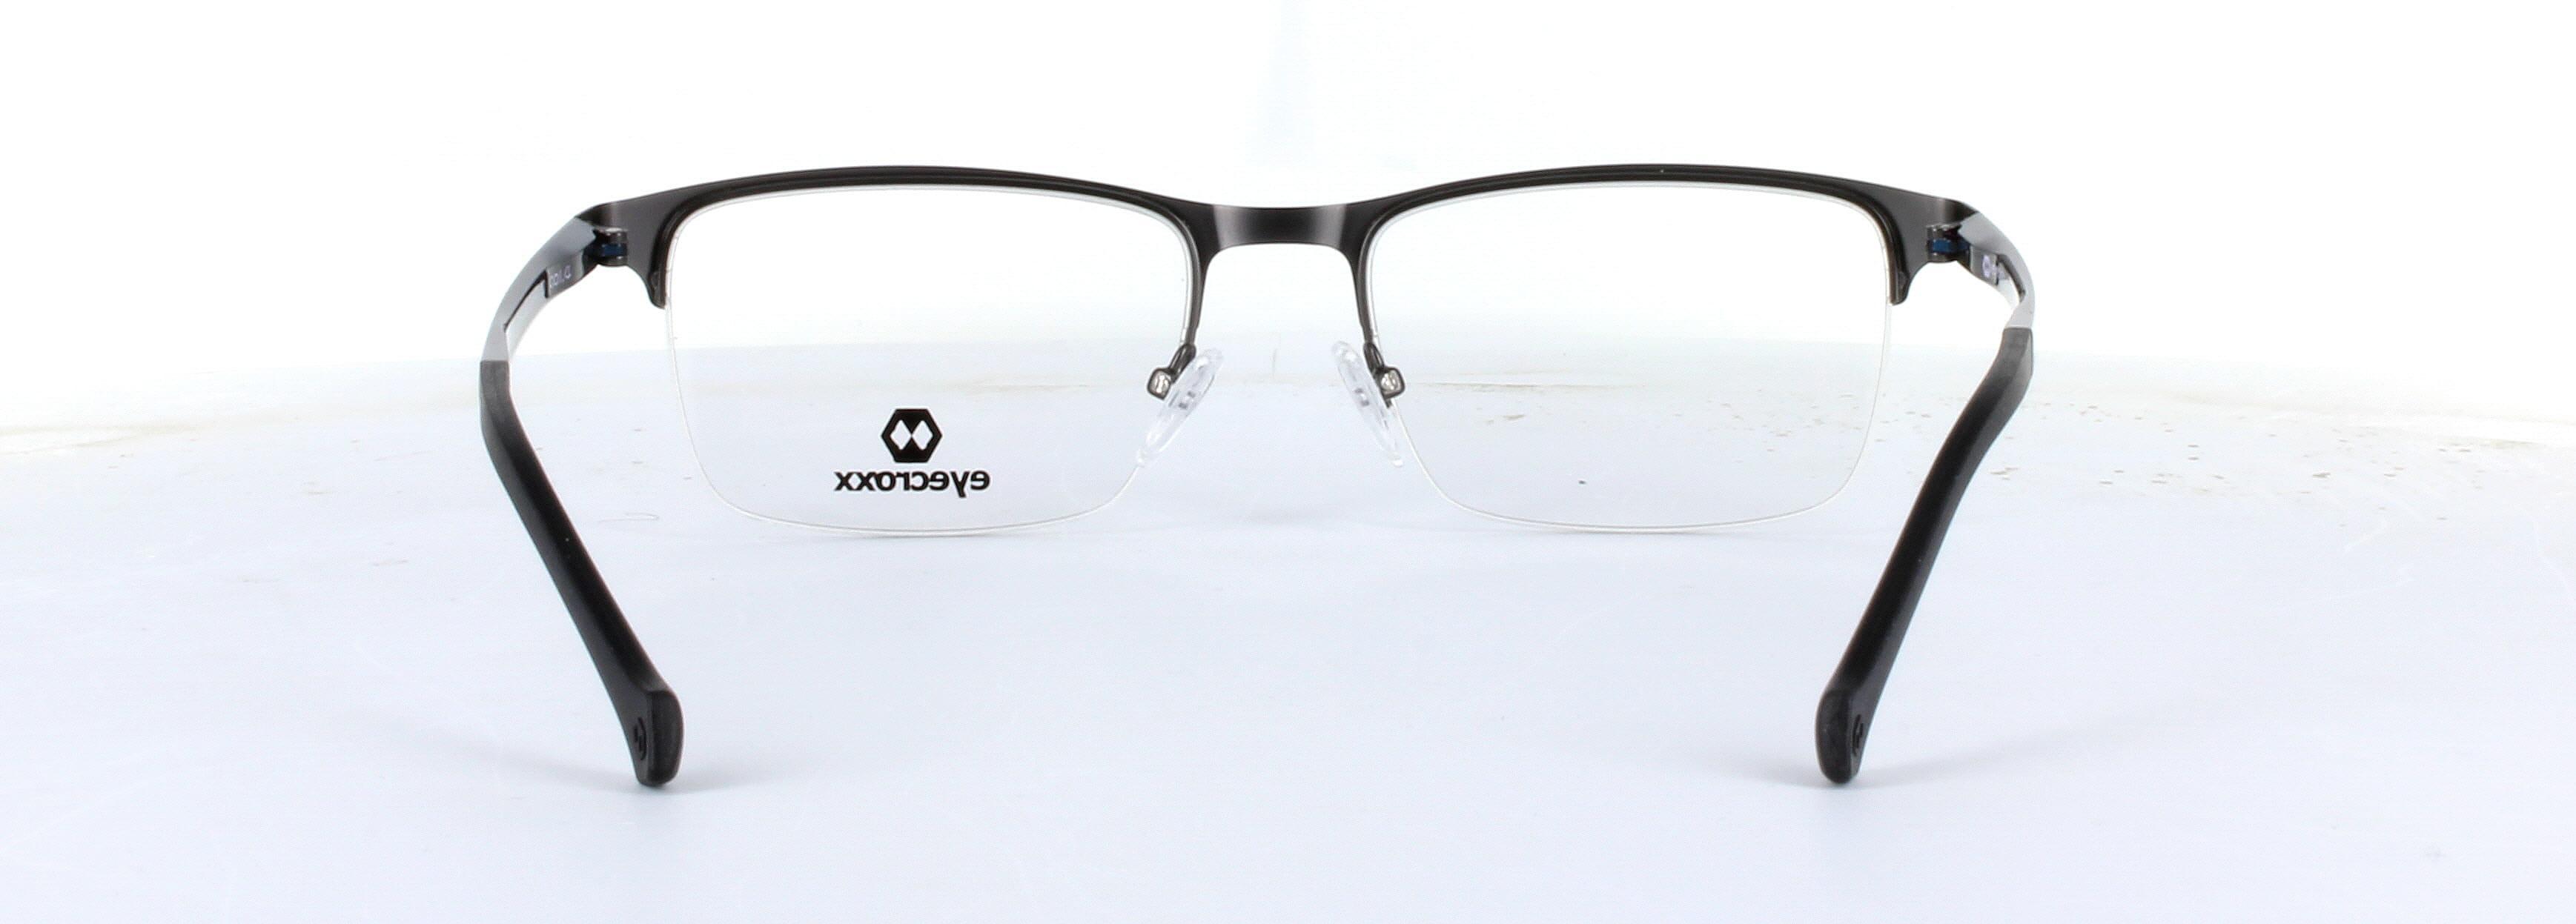 Eyecroxx 555-C4 Gunmetal Semi Rimless Metal Glasses - Image View 3